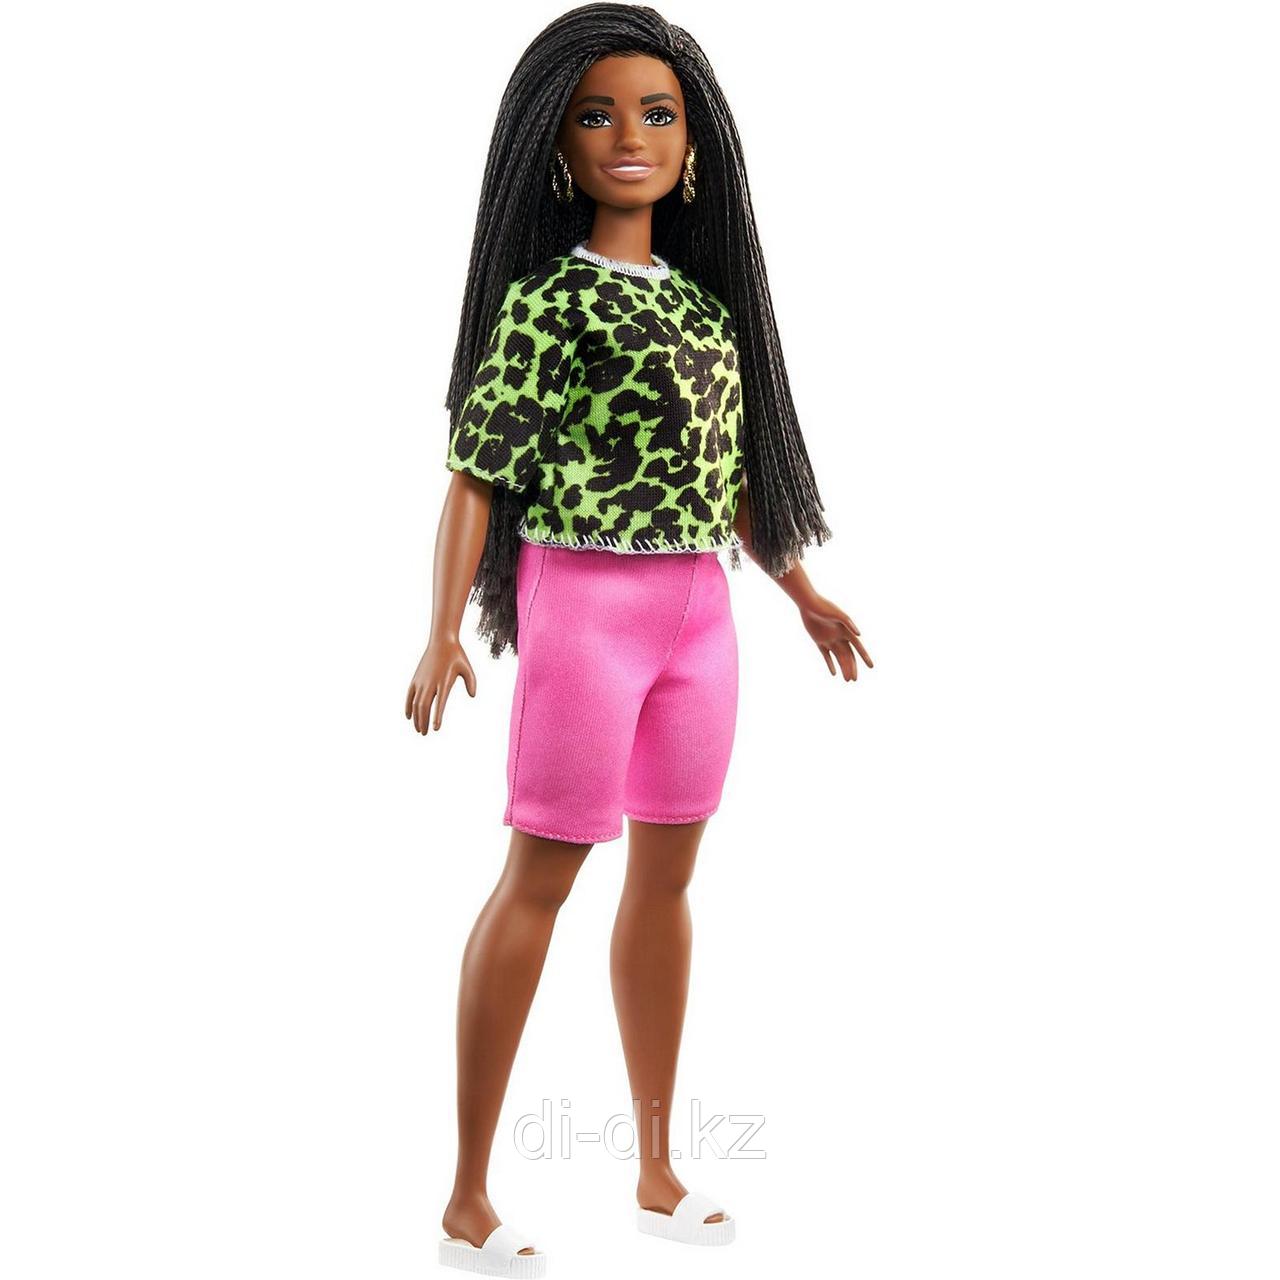 Mattel Barbie пышная (Curvy), из серии 'Мода' (Fashionistas) GYB00